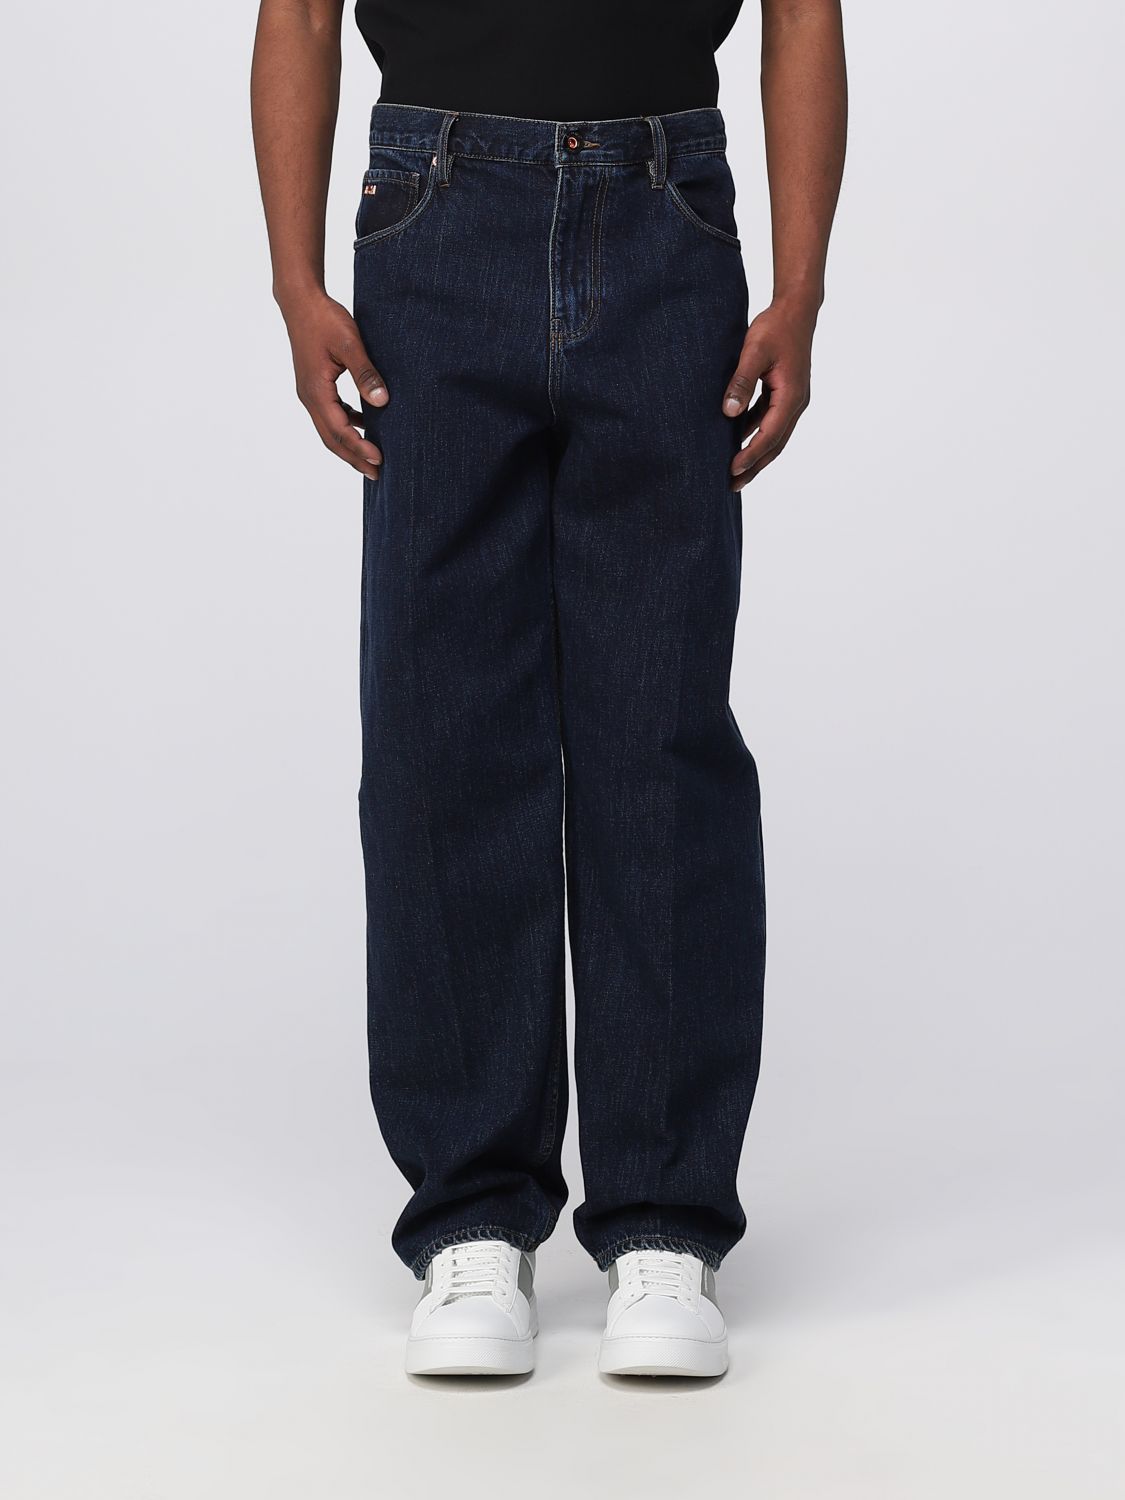 Latterlig nuttet fuzzy EMPORIO ARMANI: denim jeans - Blue | Emporio Armani jeans 3R1J731DPWZ  online at GIGLIO.COM